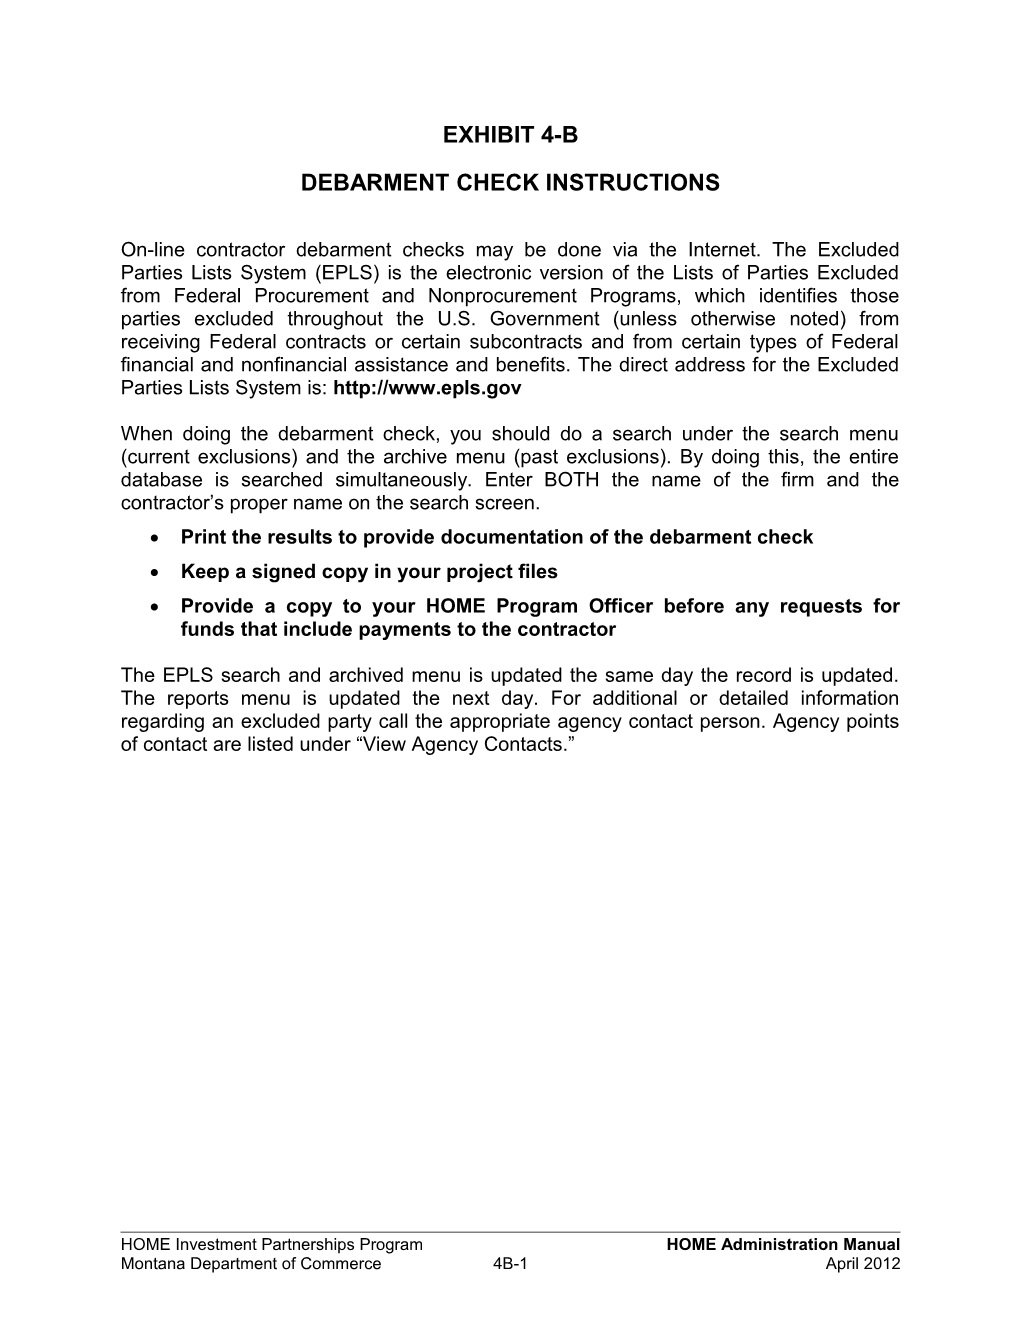 Debarment Check Instructions